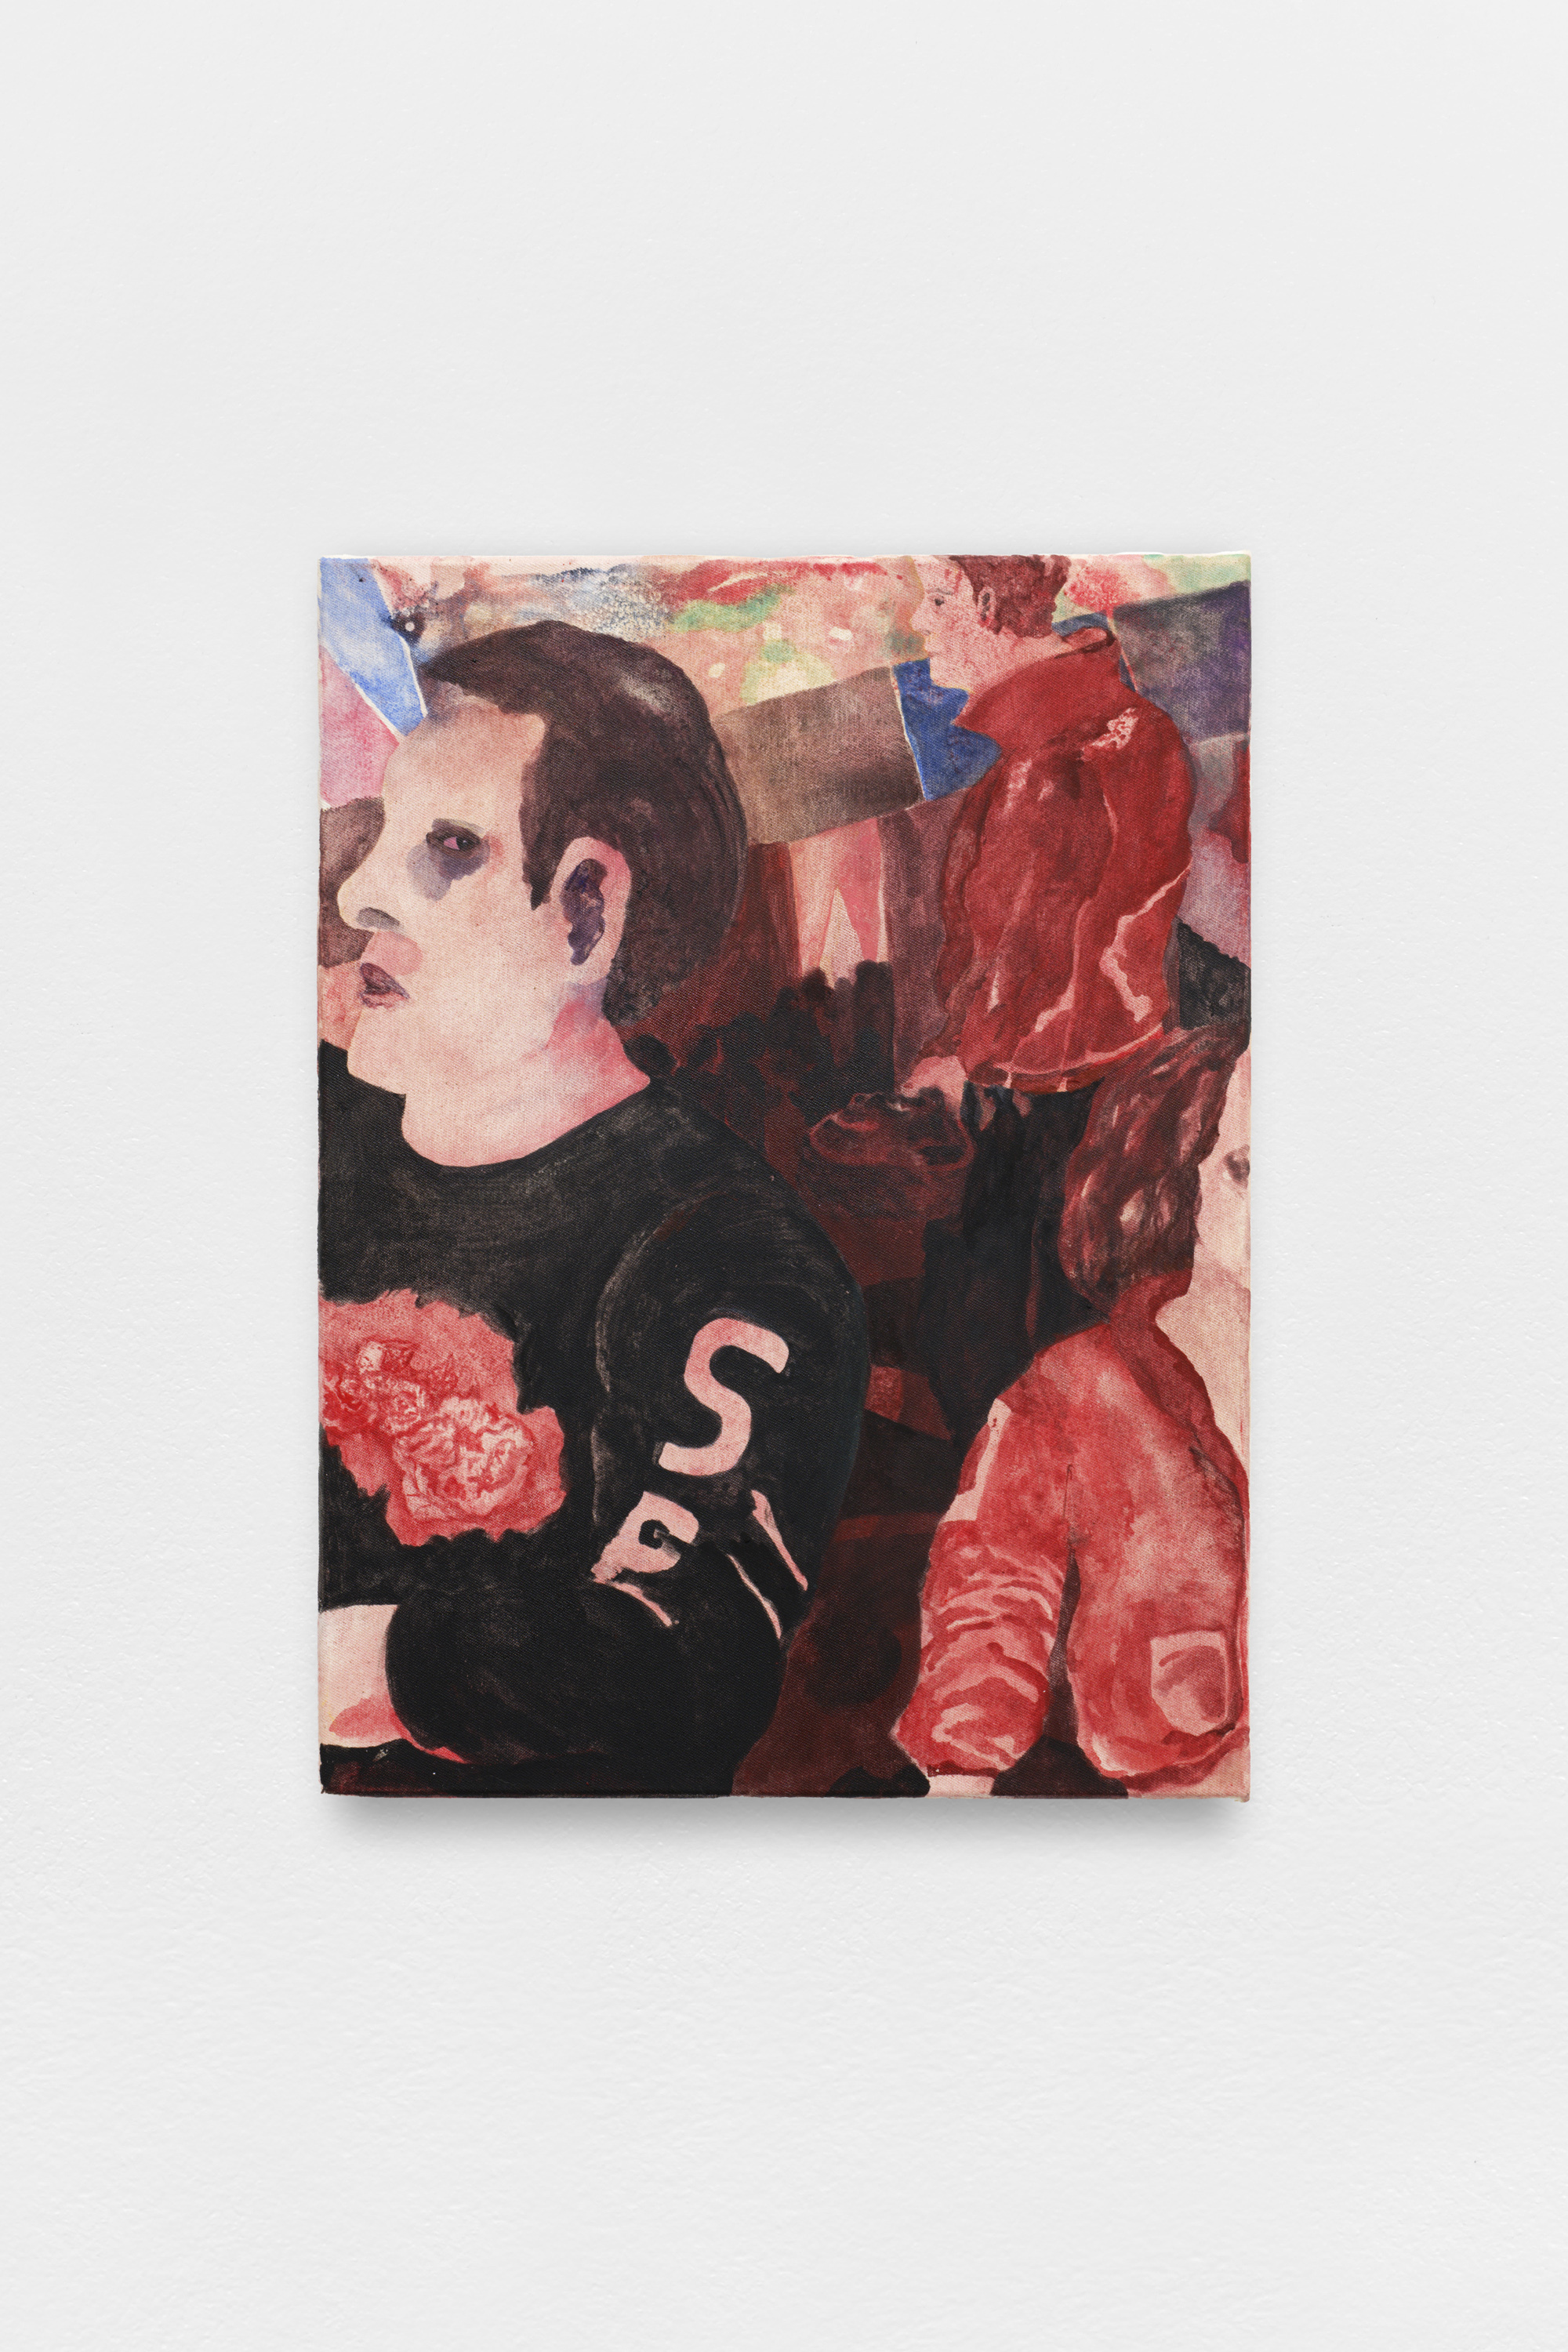 Paula Kamps, Spy, 2022, pigment and glutin on canvas, 40 x 30 cm, unique